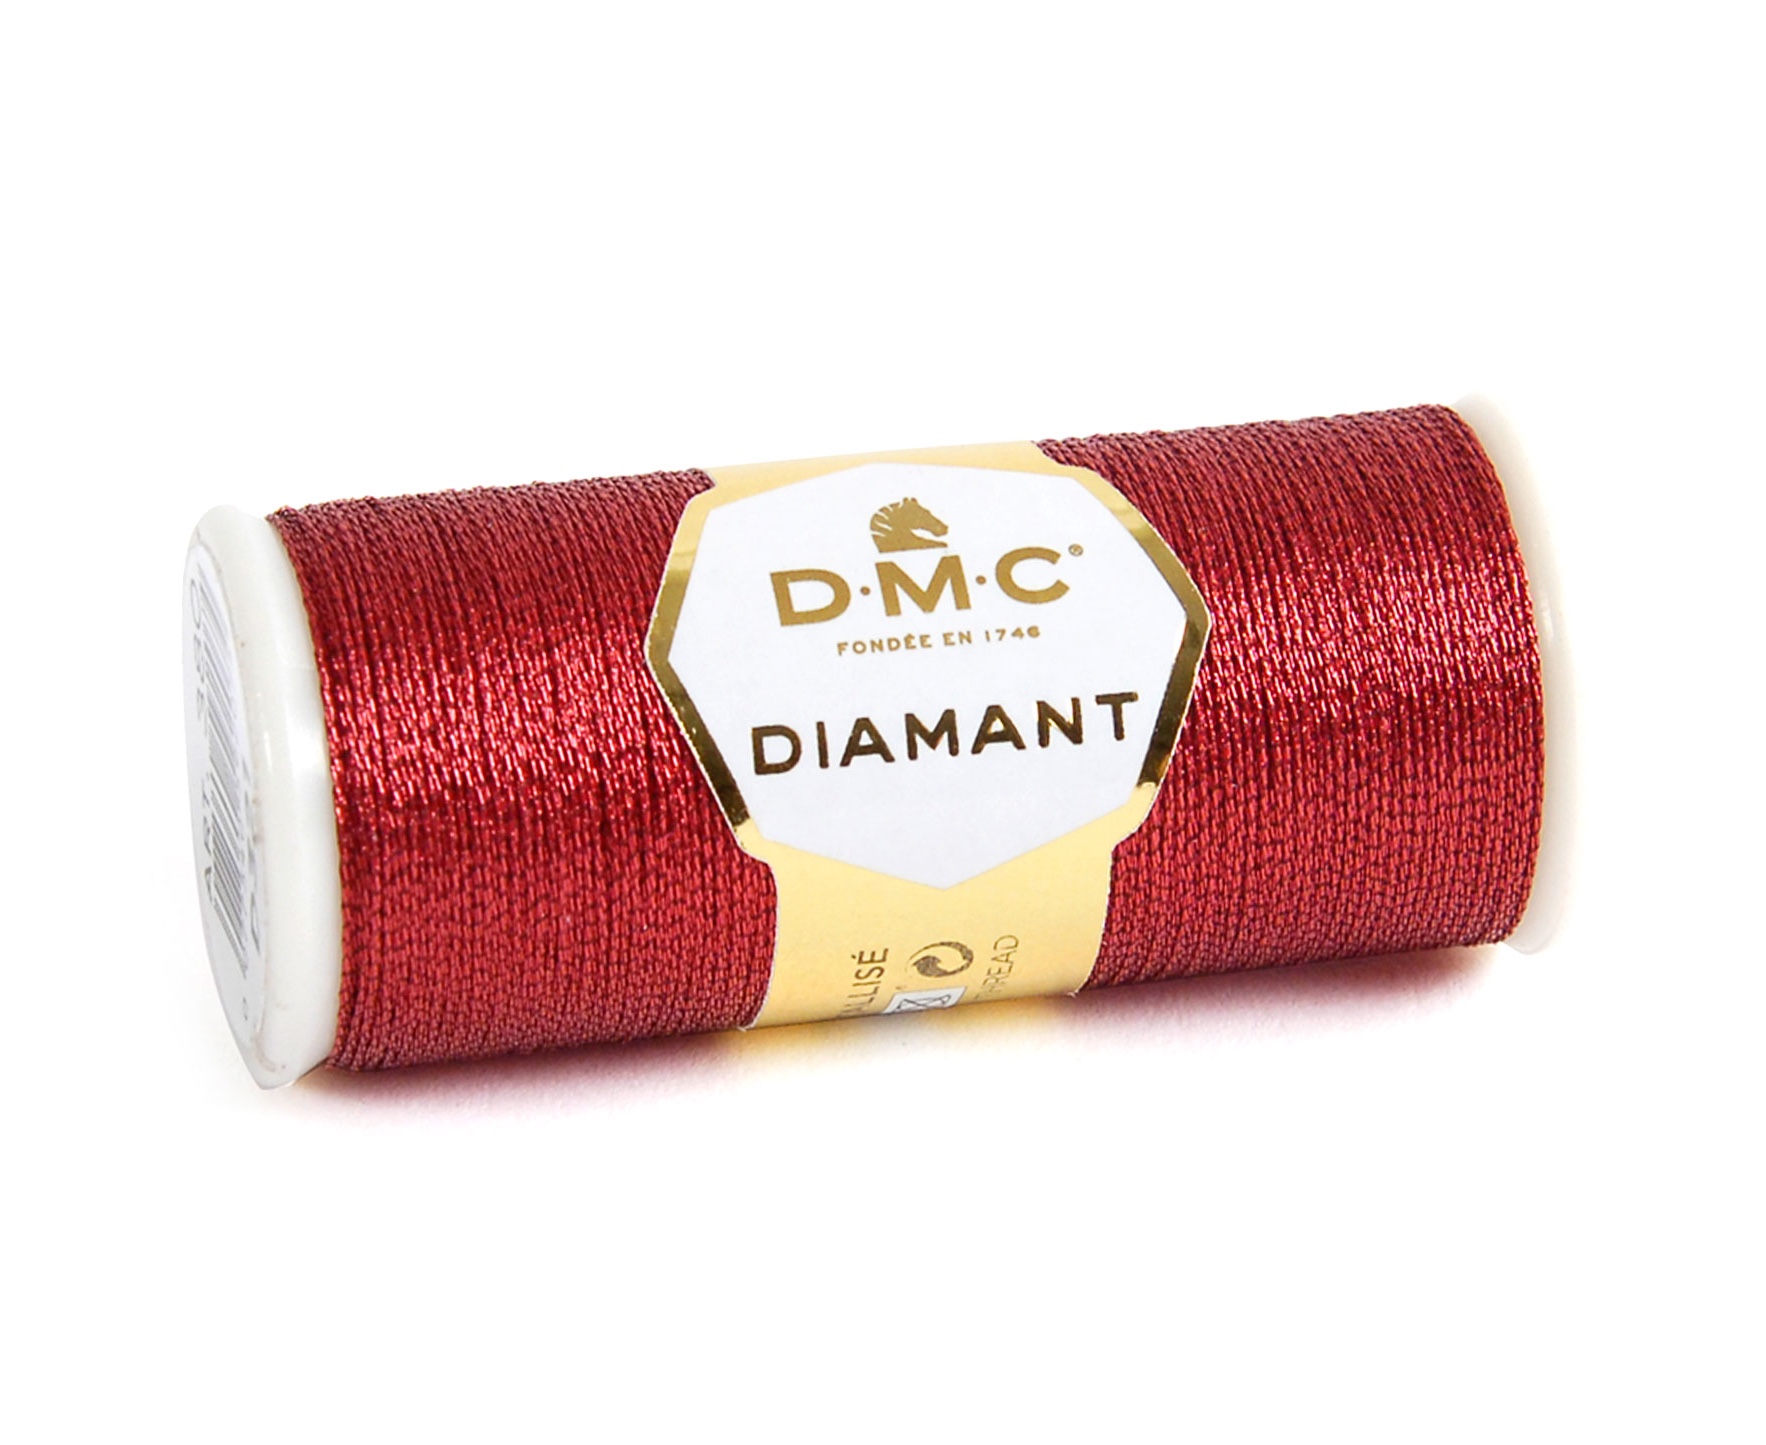 DMC Diamant D321 Red Ruby